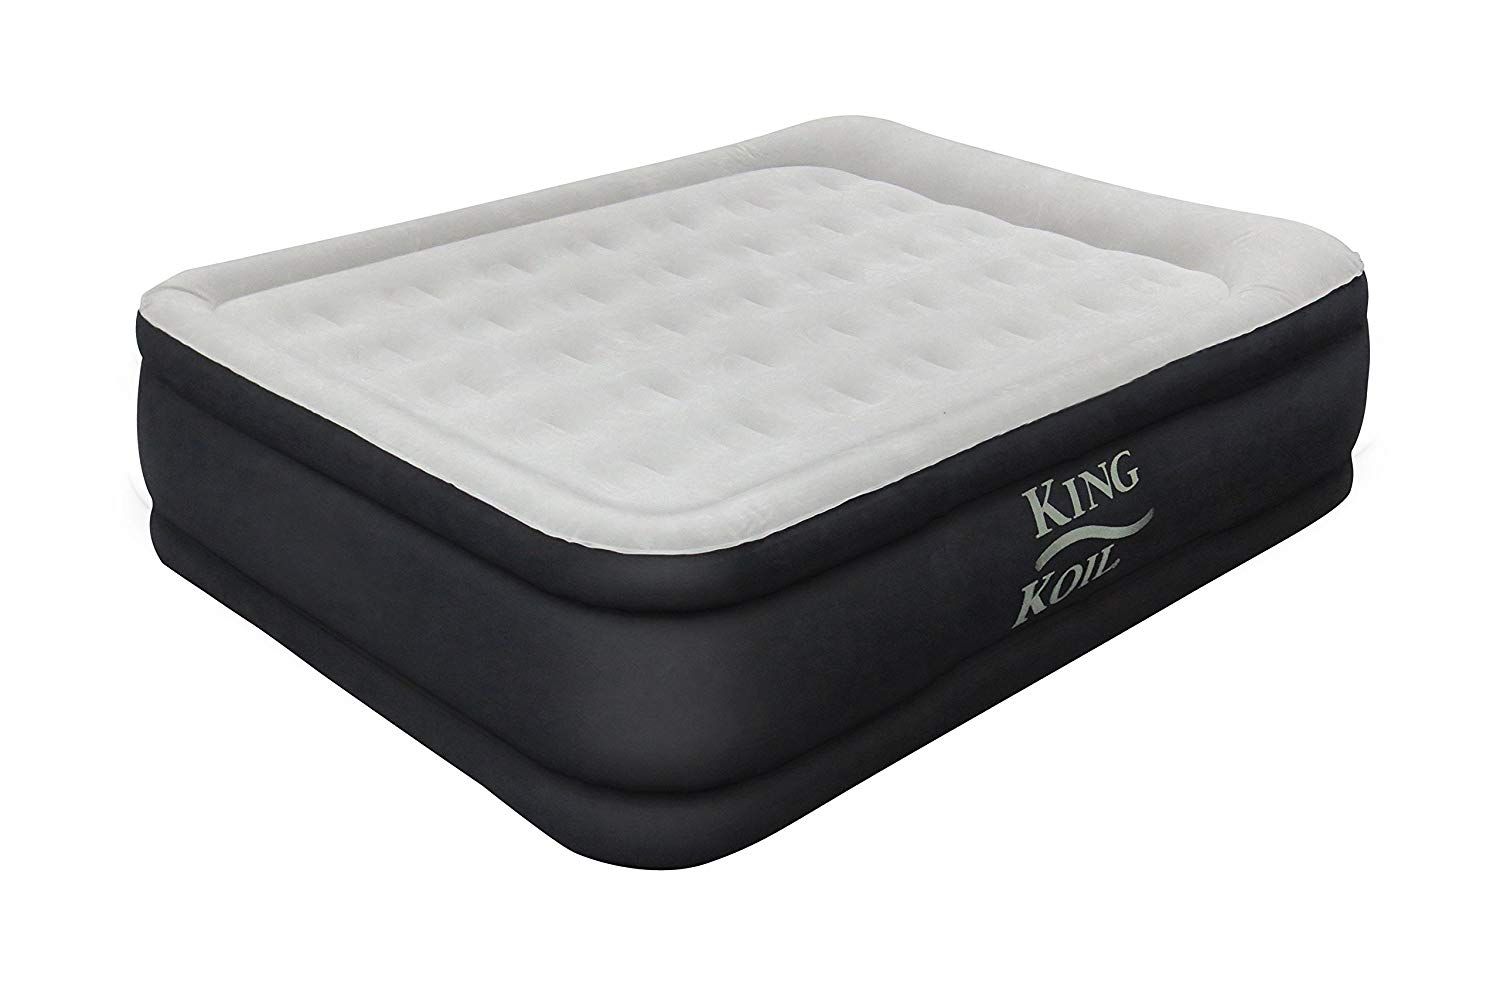 king koil air mattress nearby